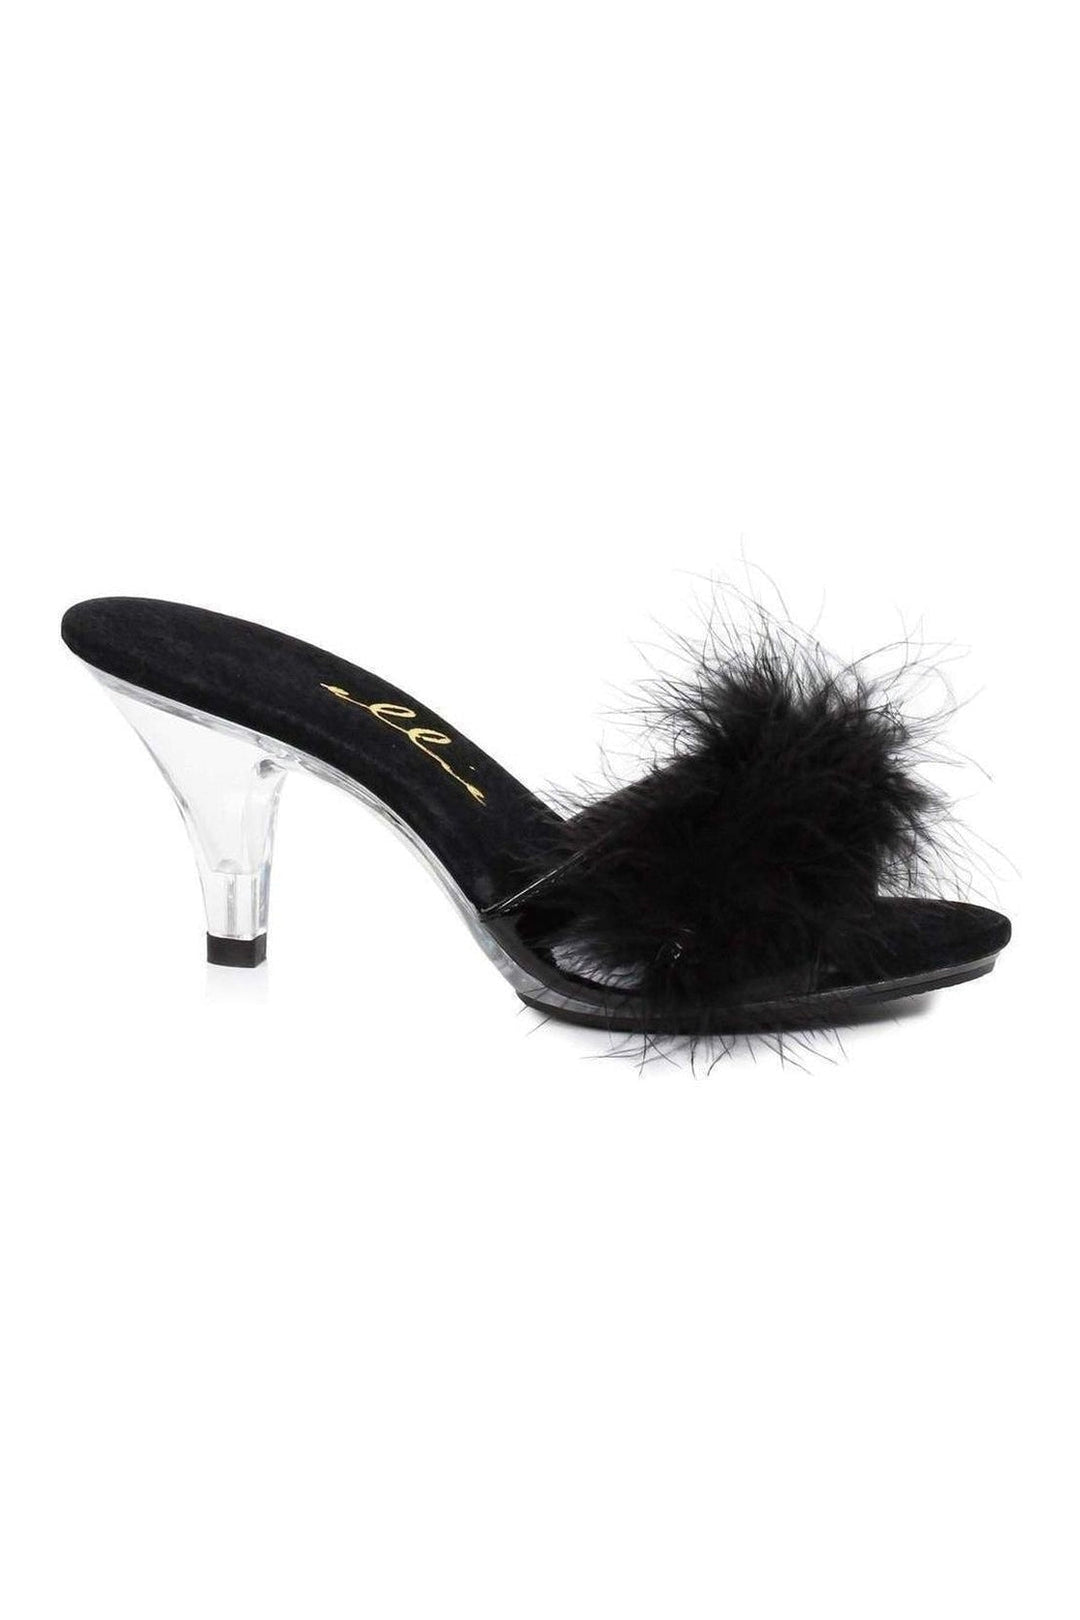 305-SASHA Marabou | Black Patent-Ellie Shoes-Black-Marabous-SEXYSHOES.COM